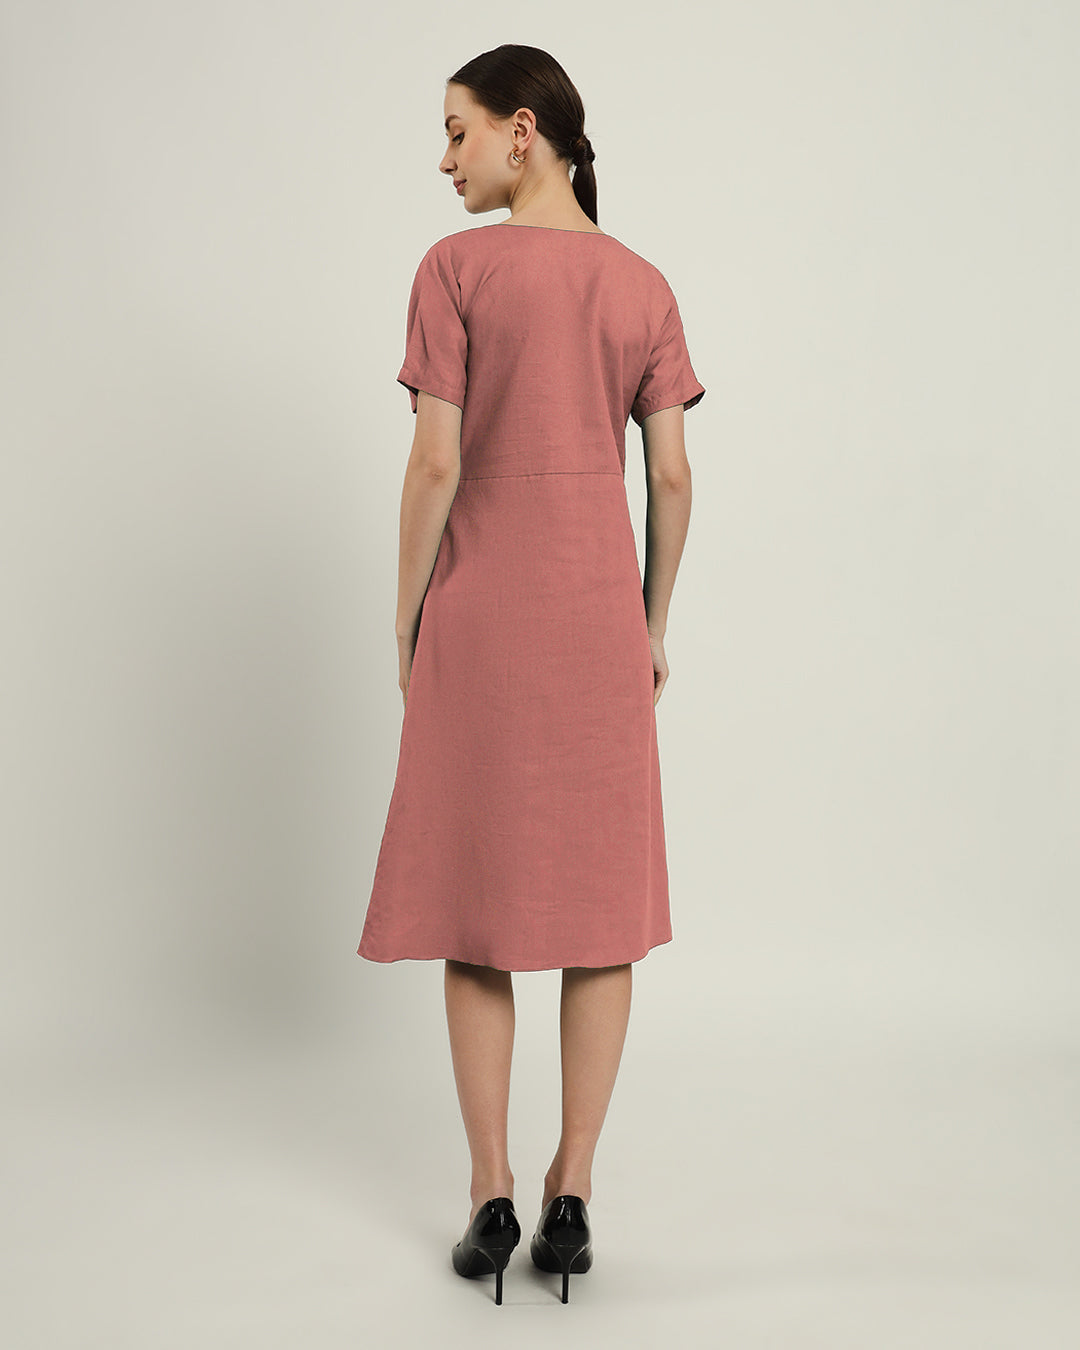 The Memphis Ivory Pink Cotton Dress